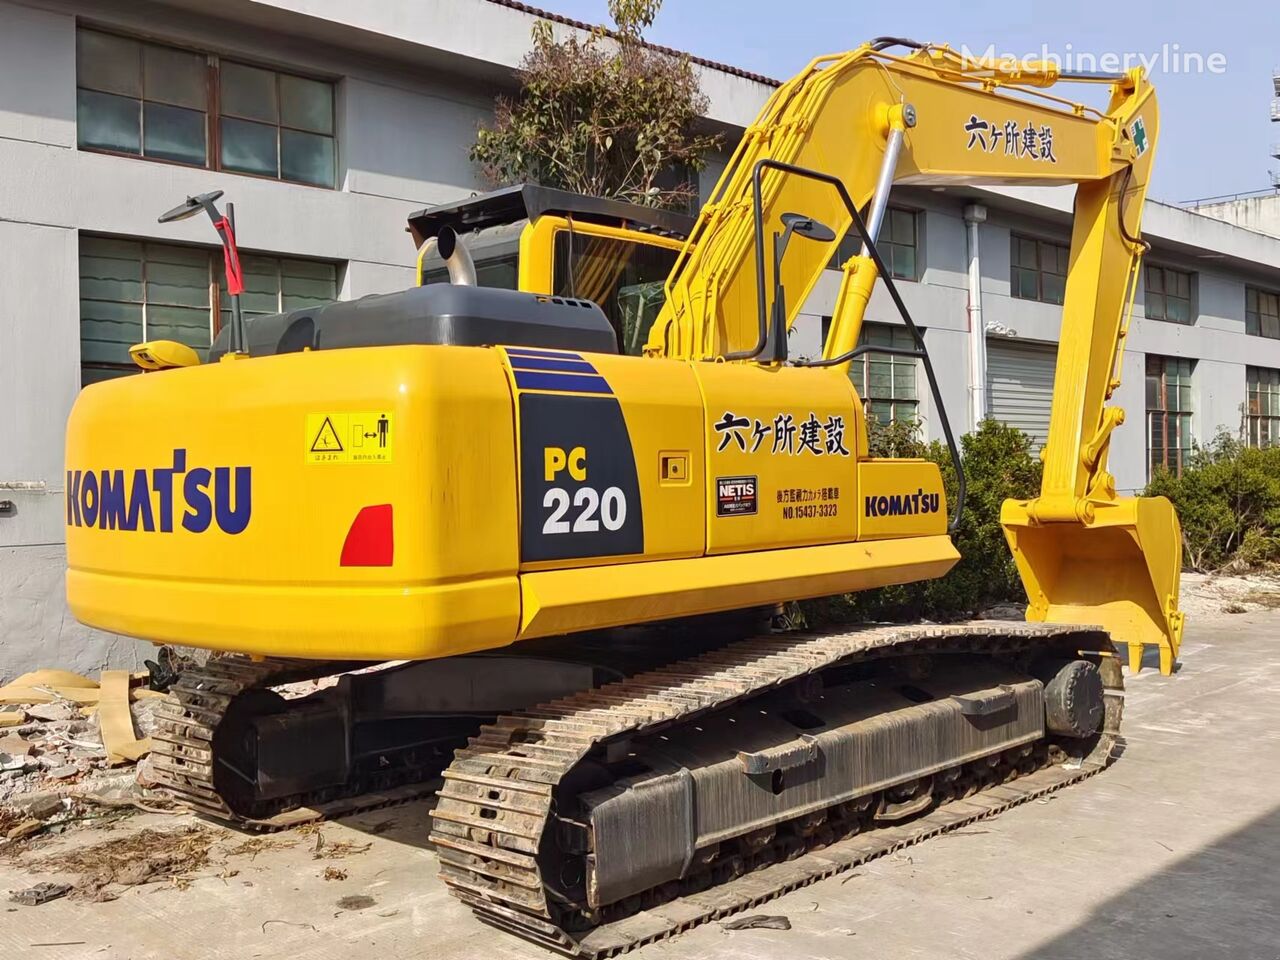 Komatsu PC220-8 PC220-7 PC220-6 tracked excavator for sale China